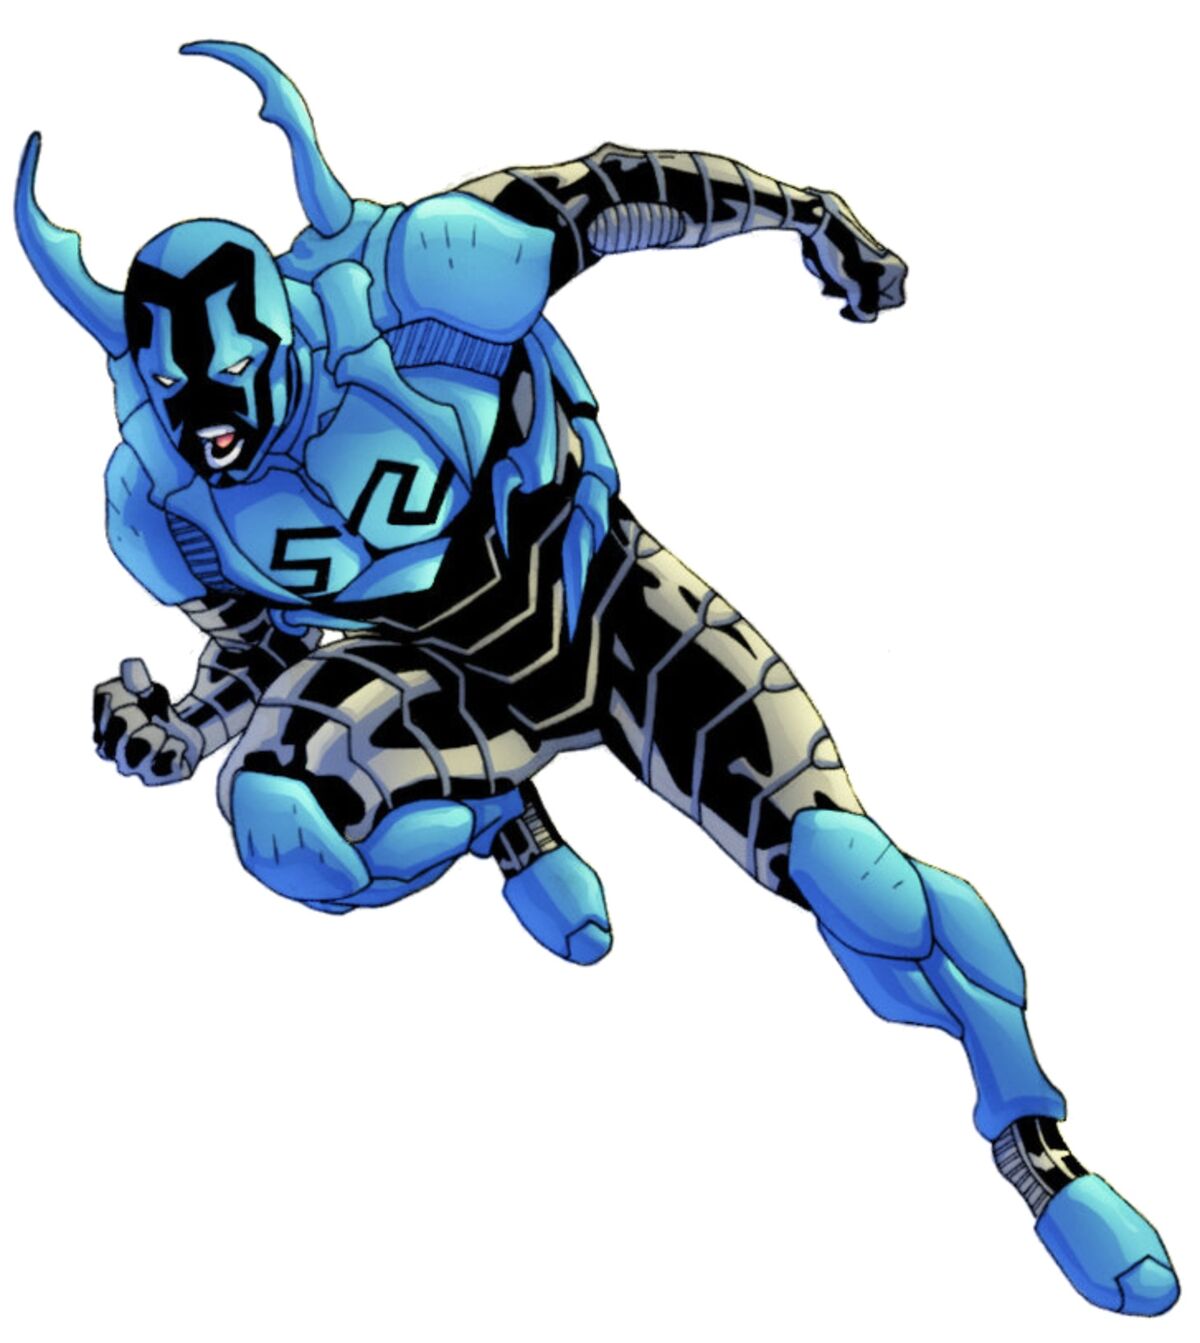 Superhero Origins: Blue Beetle